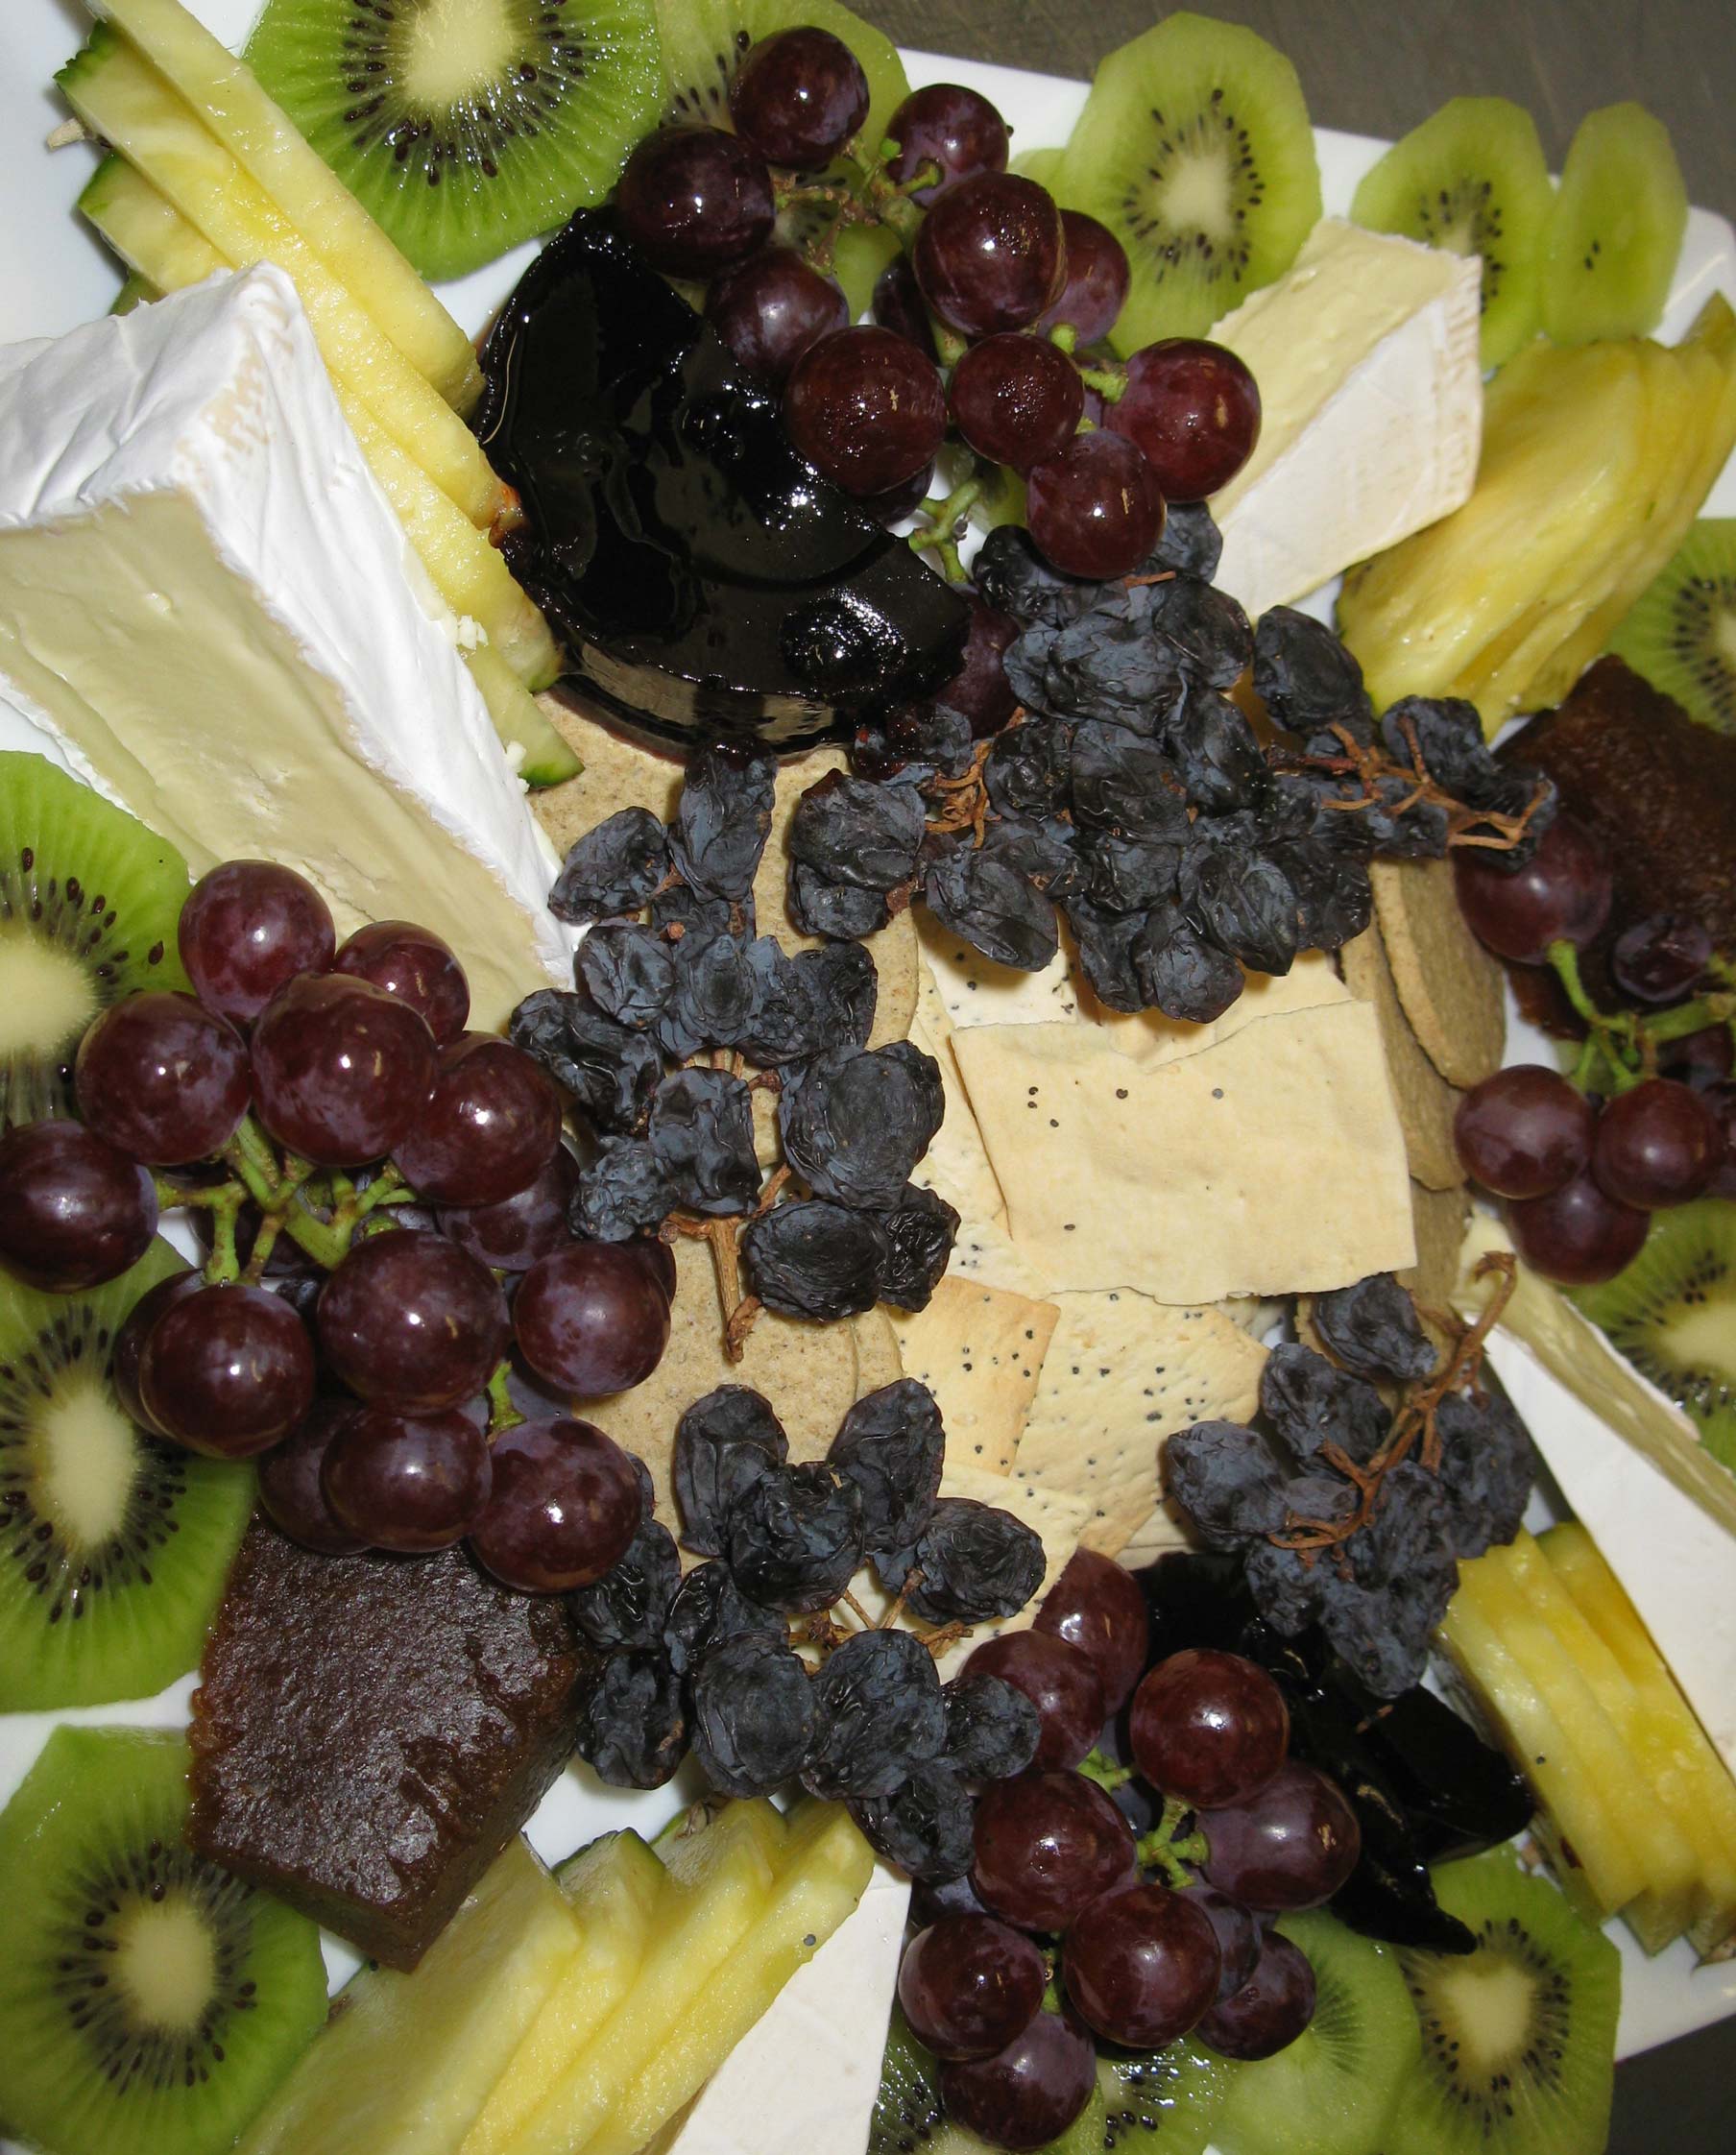 Fruit & cheese platter